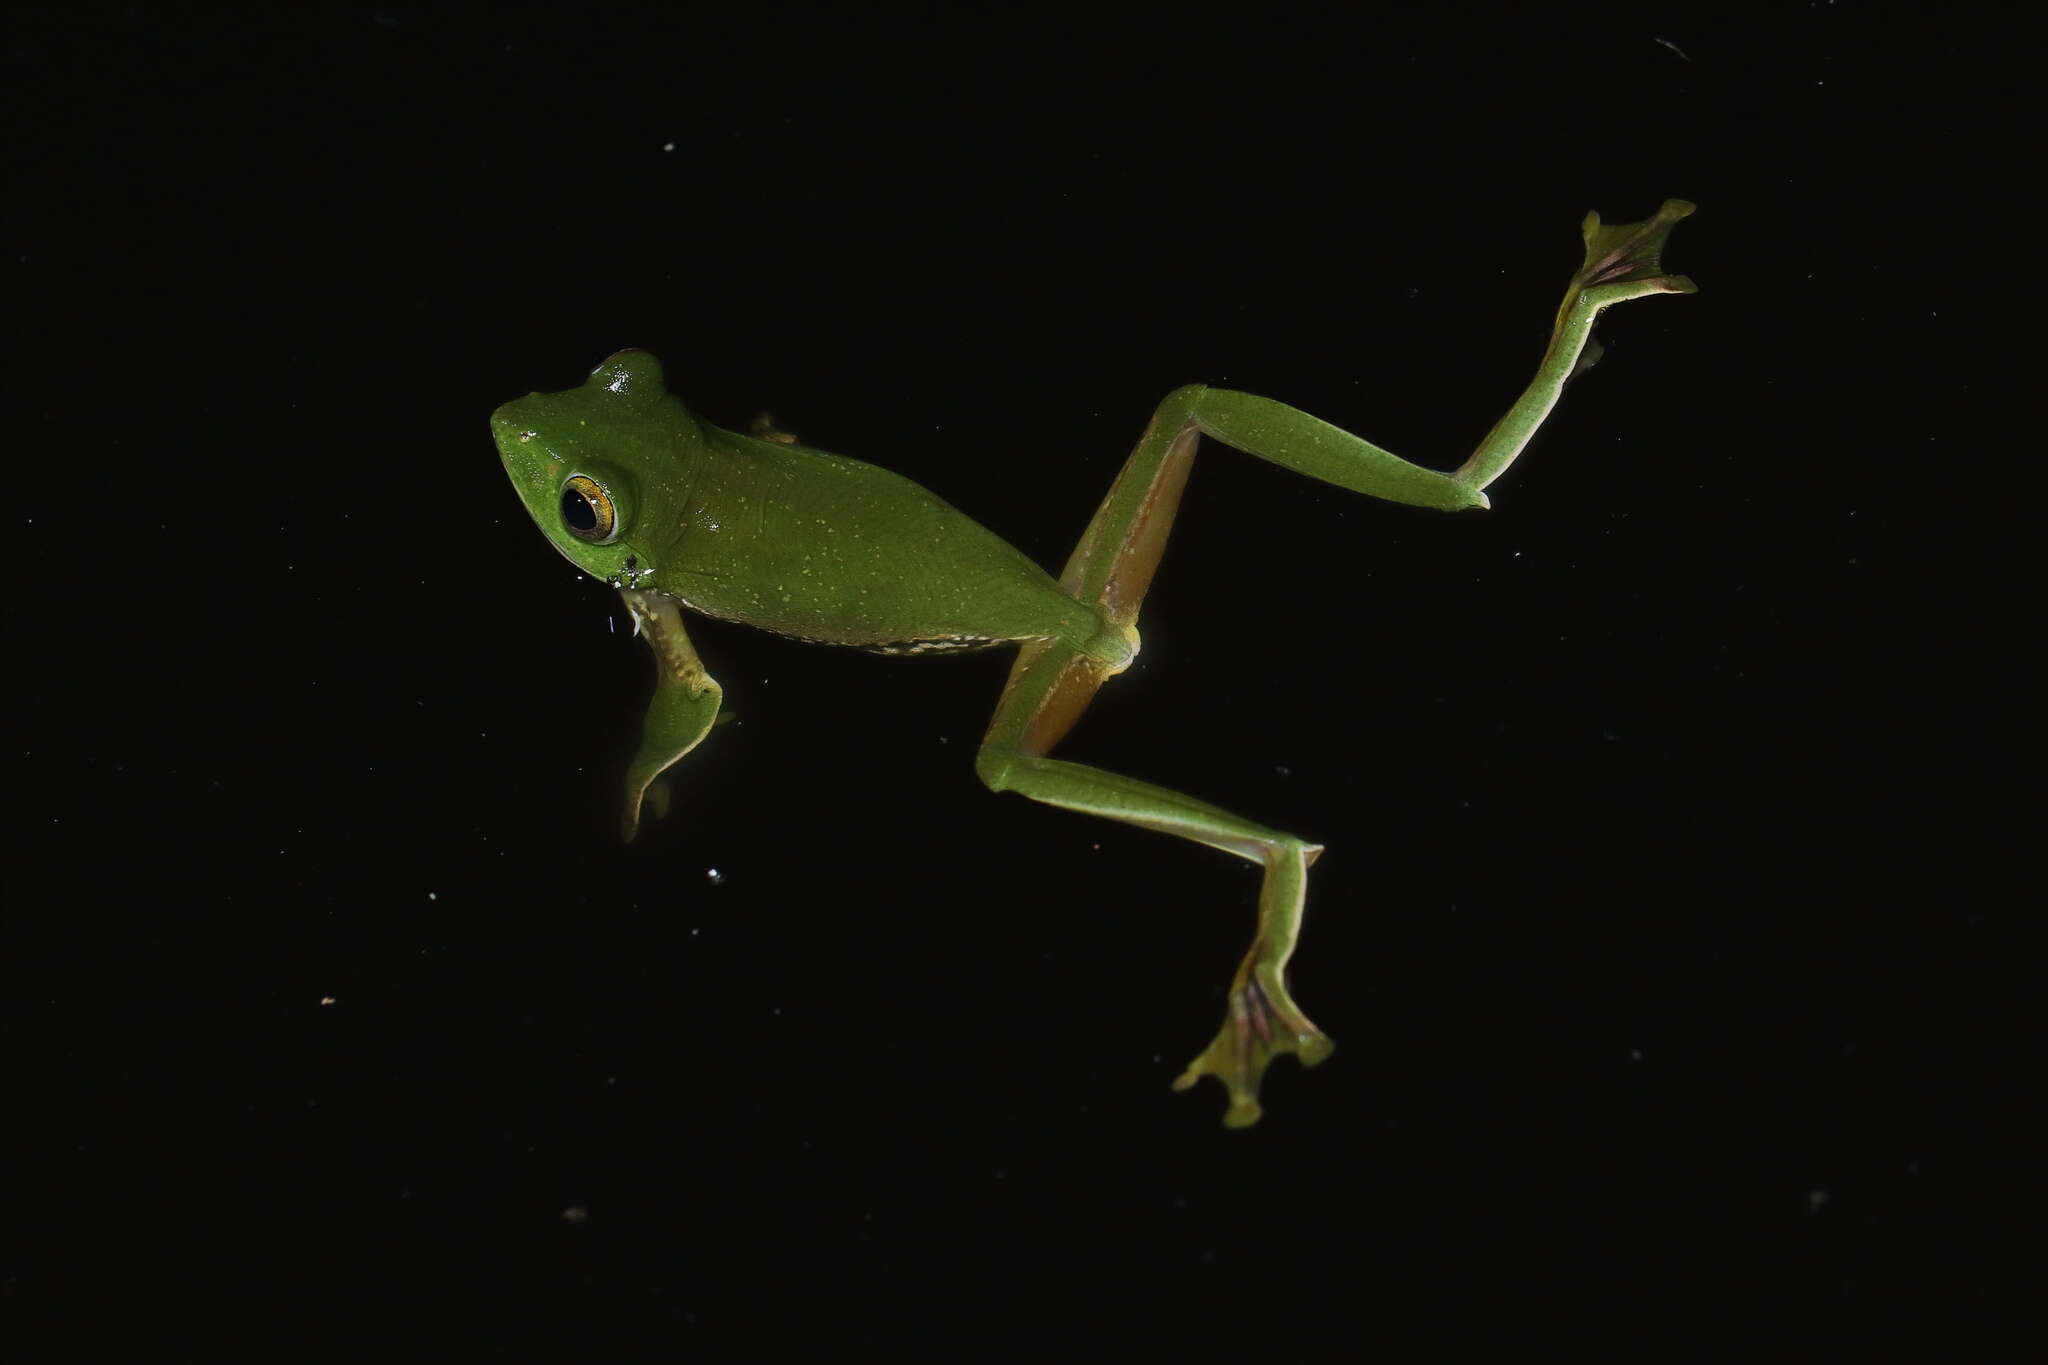 Image of Parachuting frog